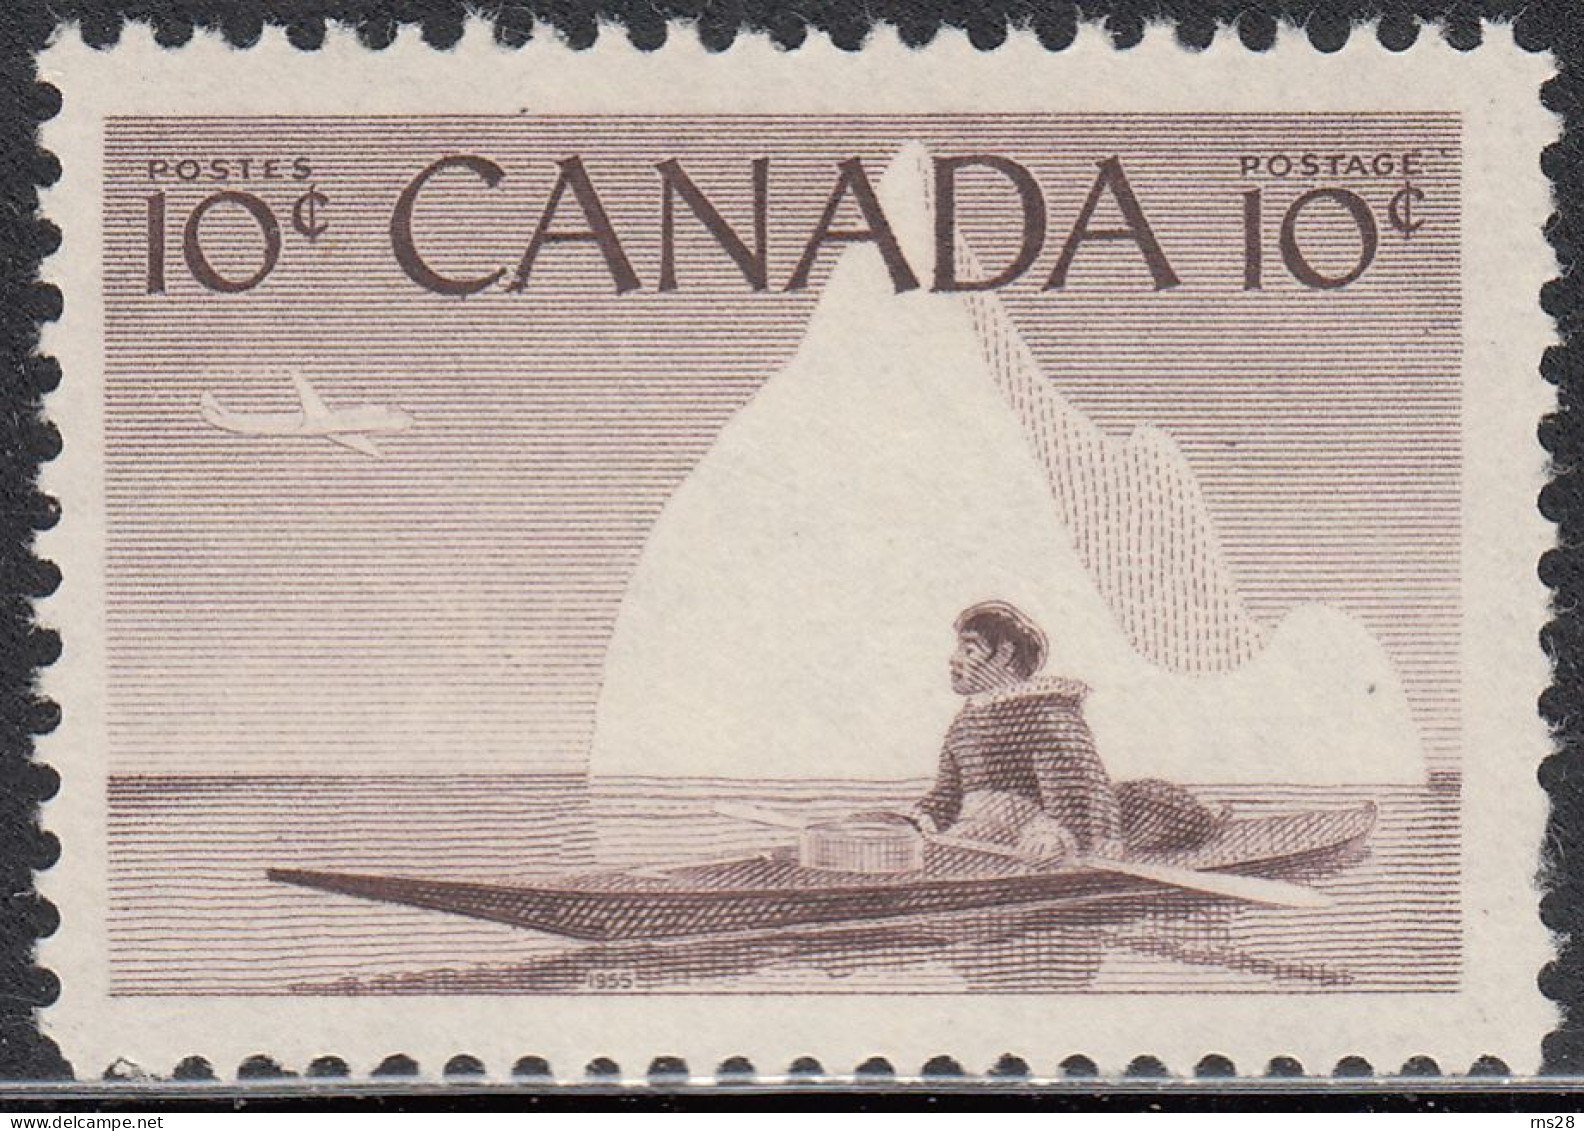 Canada Scott # 351 MNH Inuk & Kayak - Ungebraucht